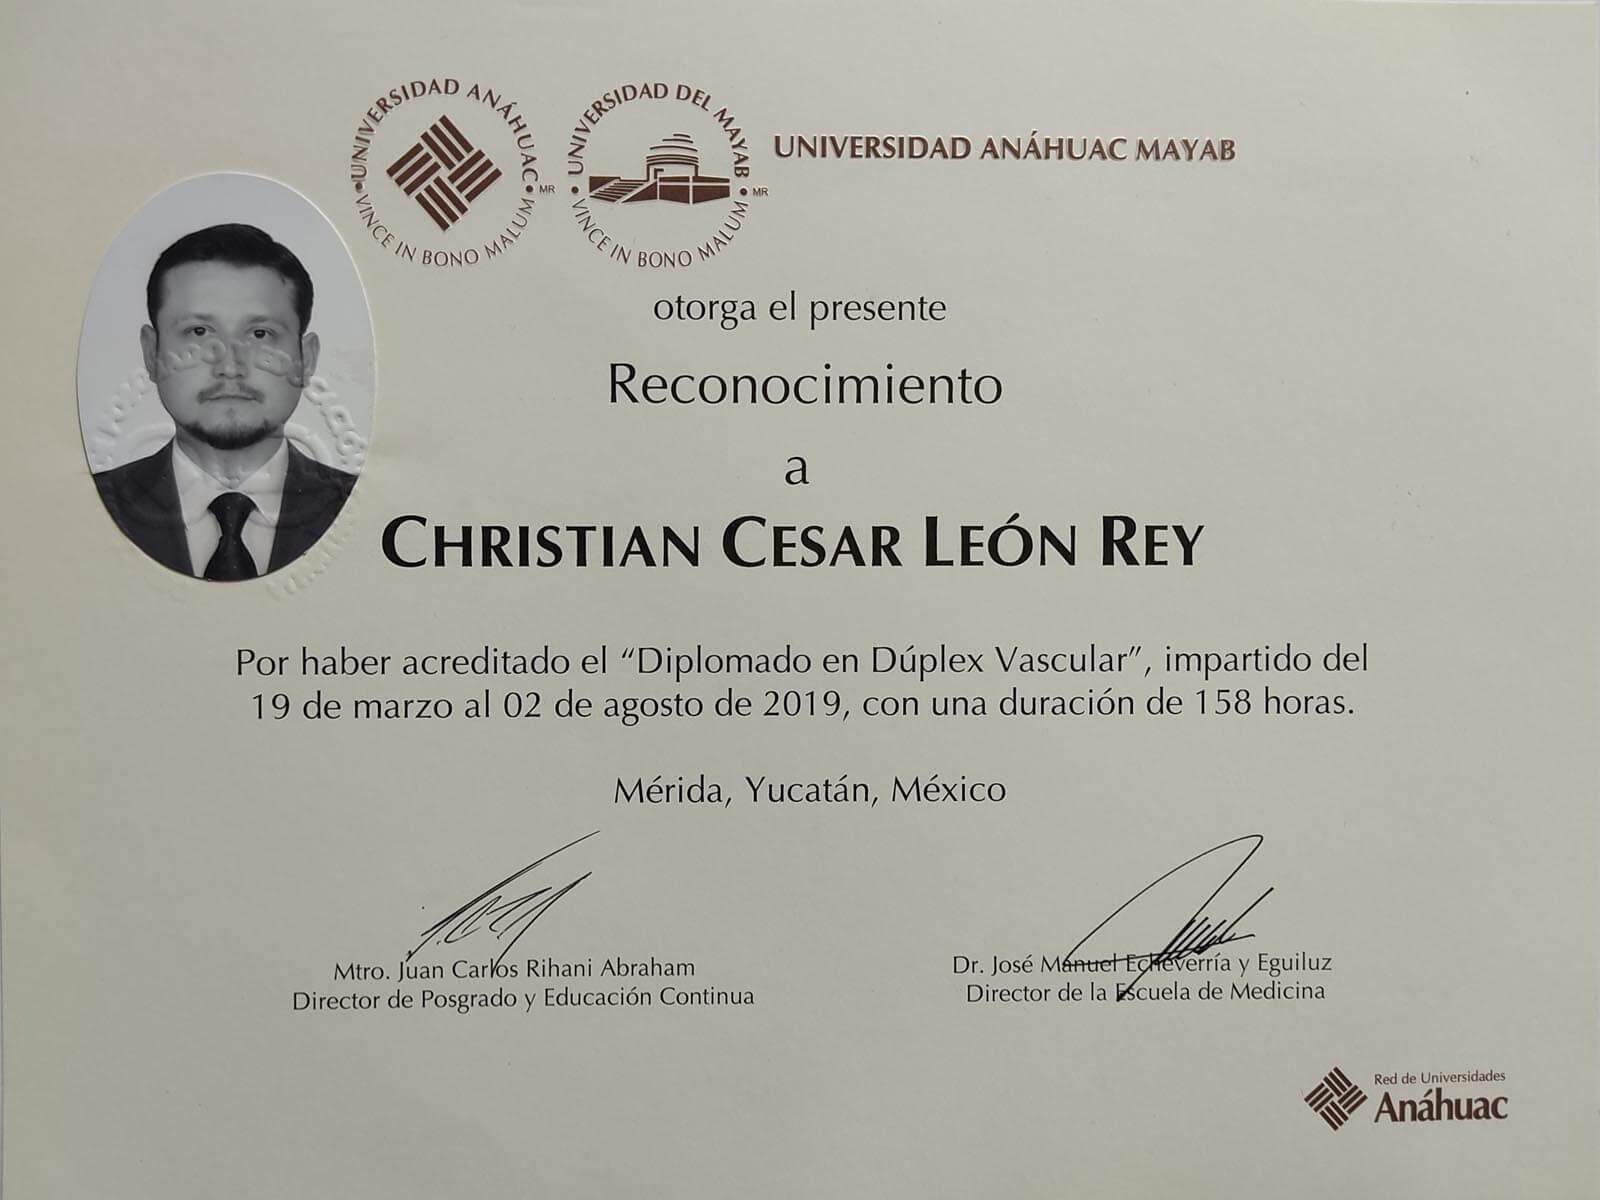 Reconocimiento diplomado duplex vascular - Dr. Christian César León Rey